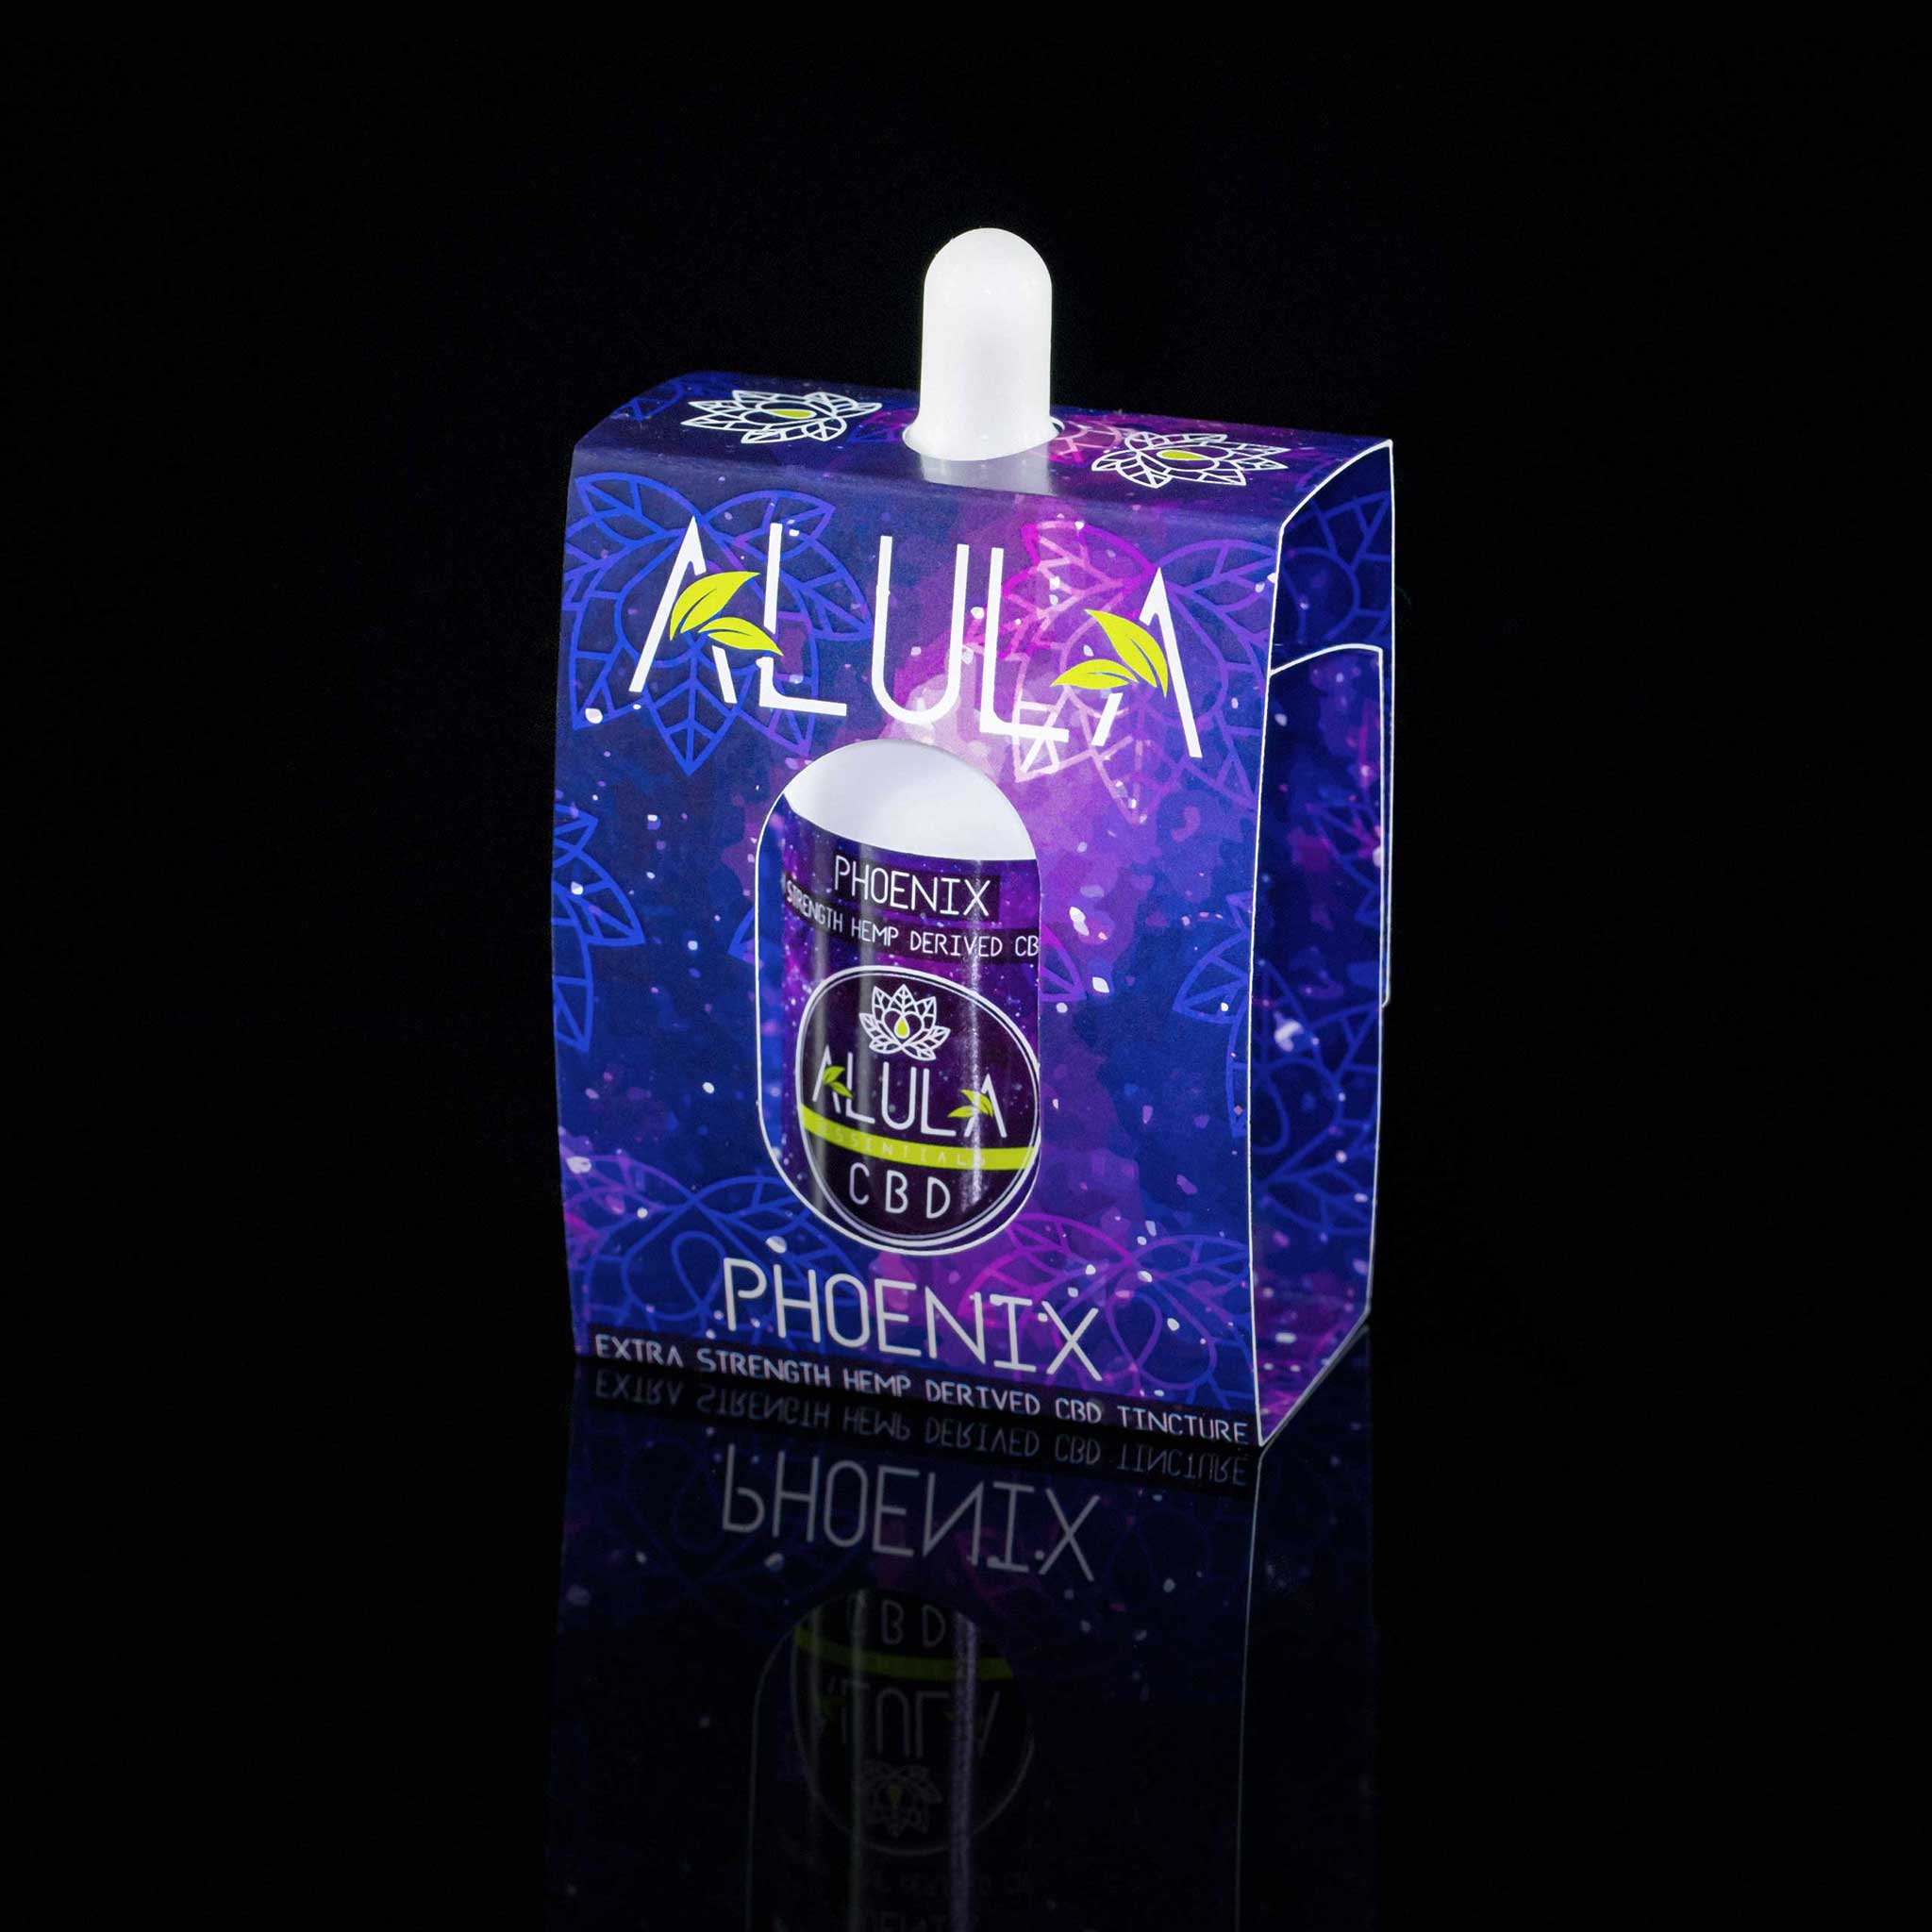 Alula Essentials Extra Strength Tincture 1,000mg (Phoenix)